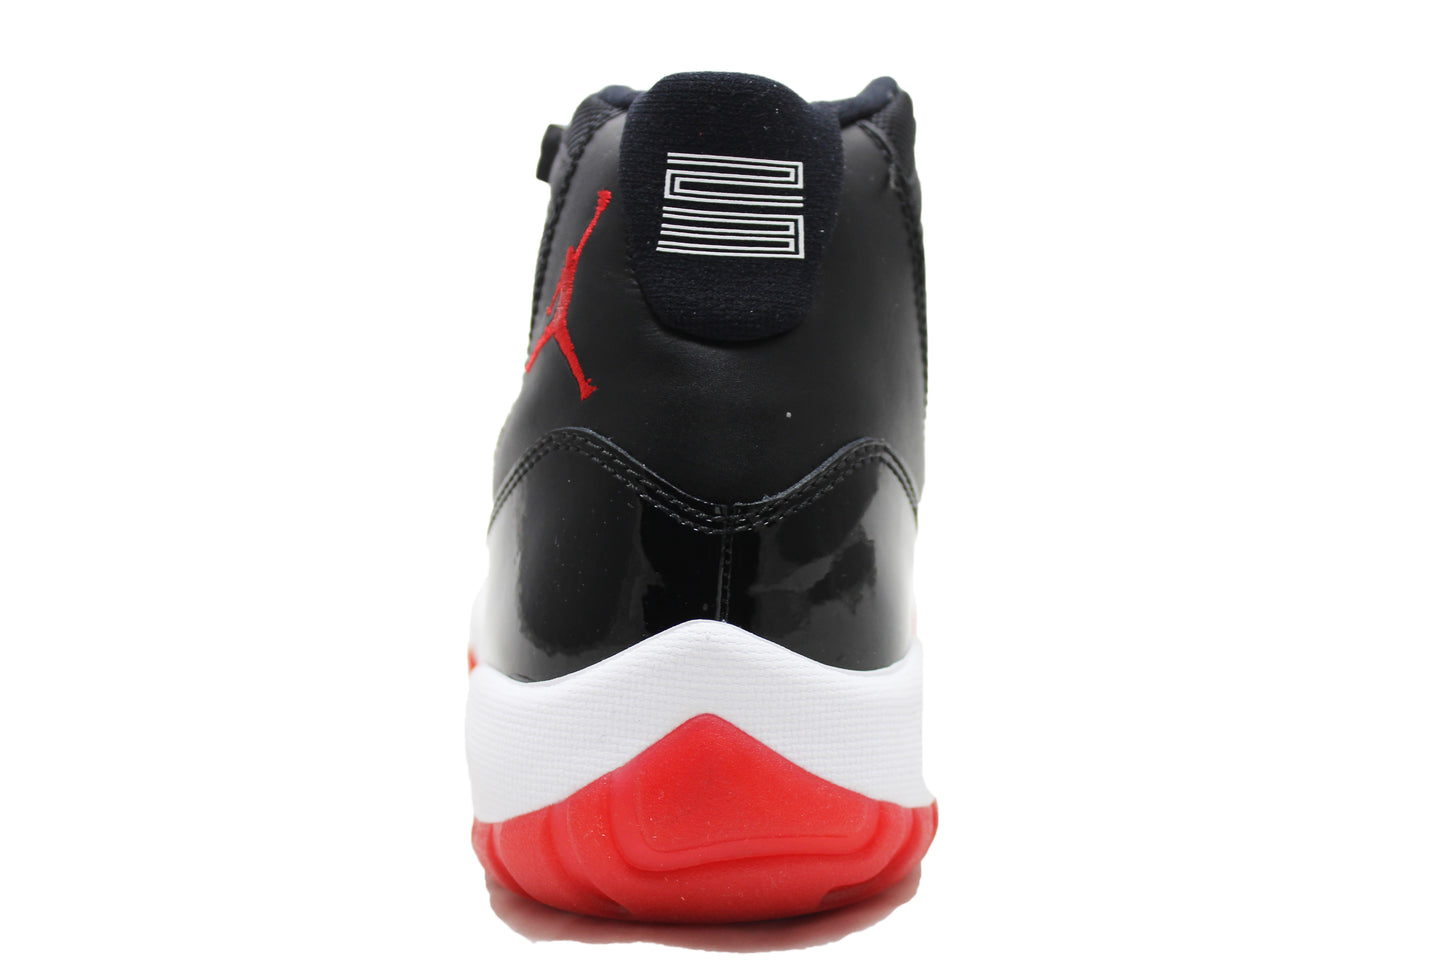 Air Jordan 11 Retro “Bred” 2012